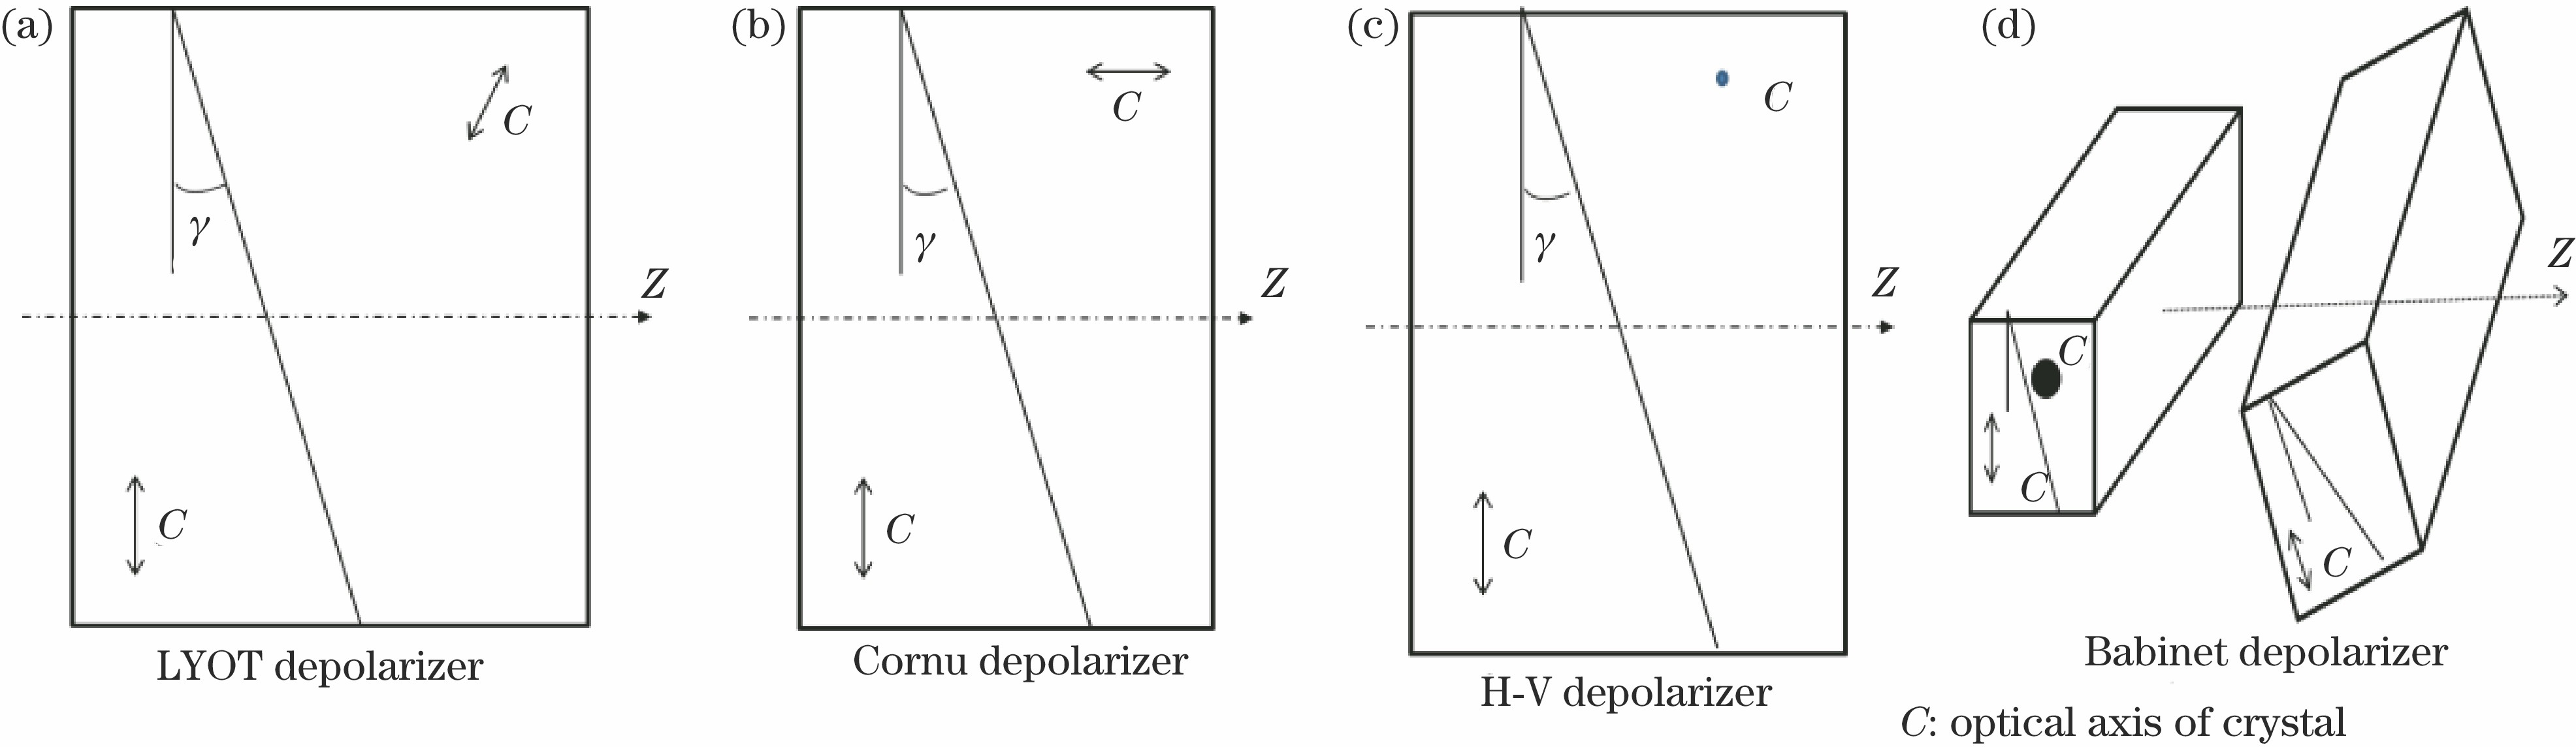 Four common depolarizers. (a) LYOT depolarizer; (b) cornu depolarizer; (c) double wedge H-V depolarizer; (d) double Babinet depolarizer